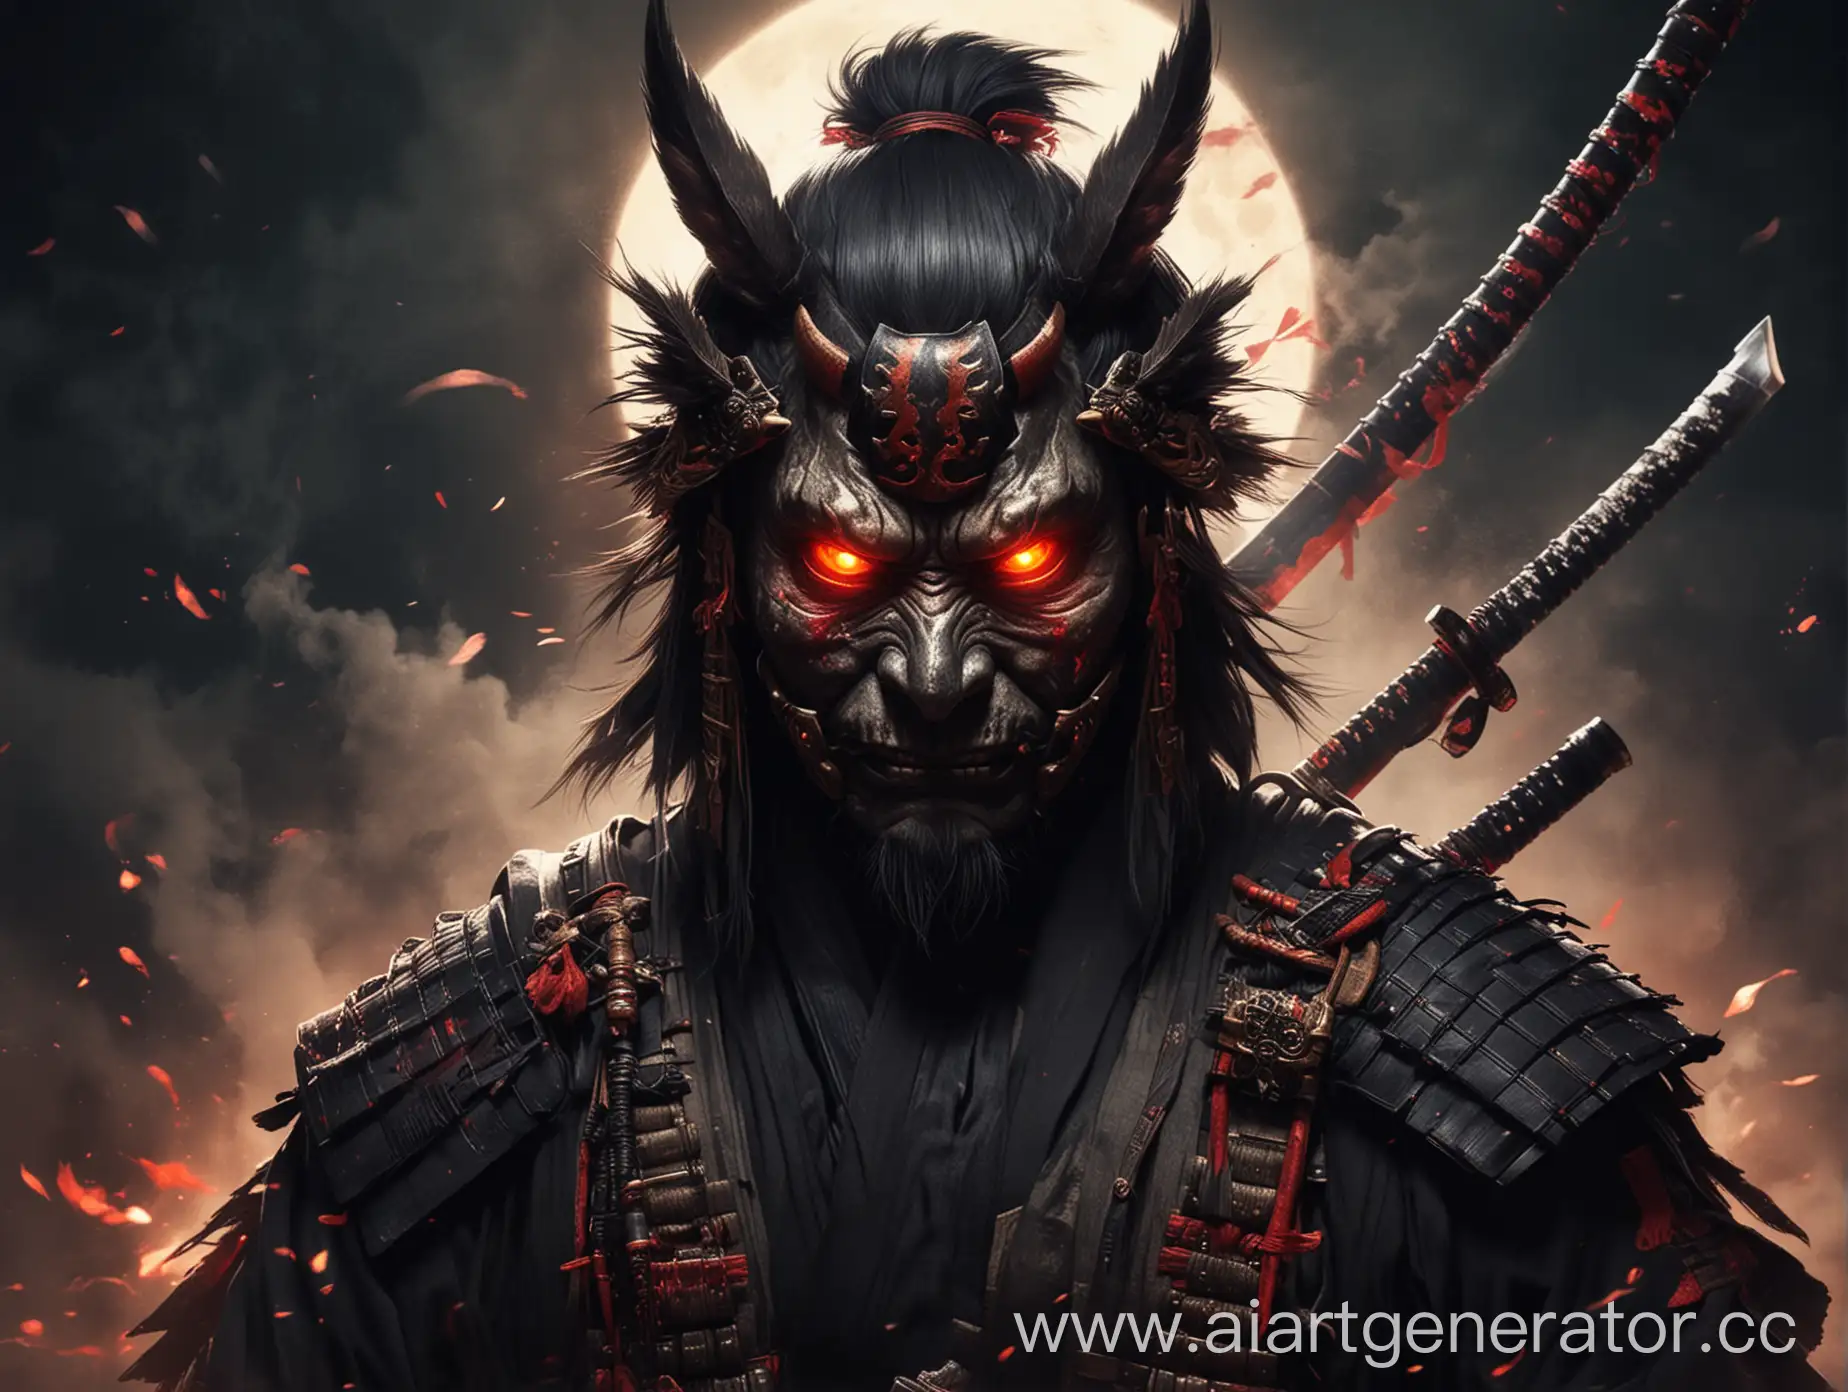 Samurai-Warrior-with-Glowing-Eyes-and-Tengu-Mask